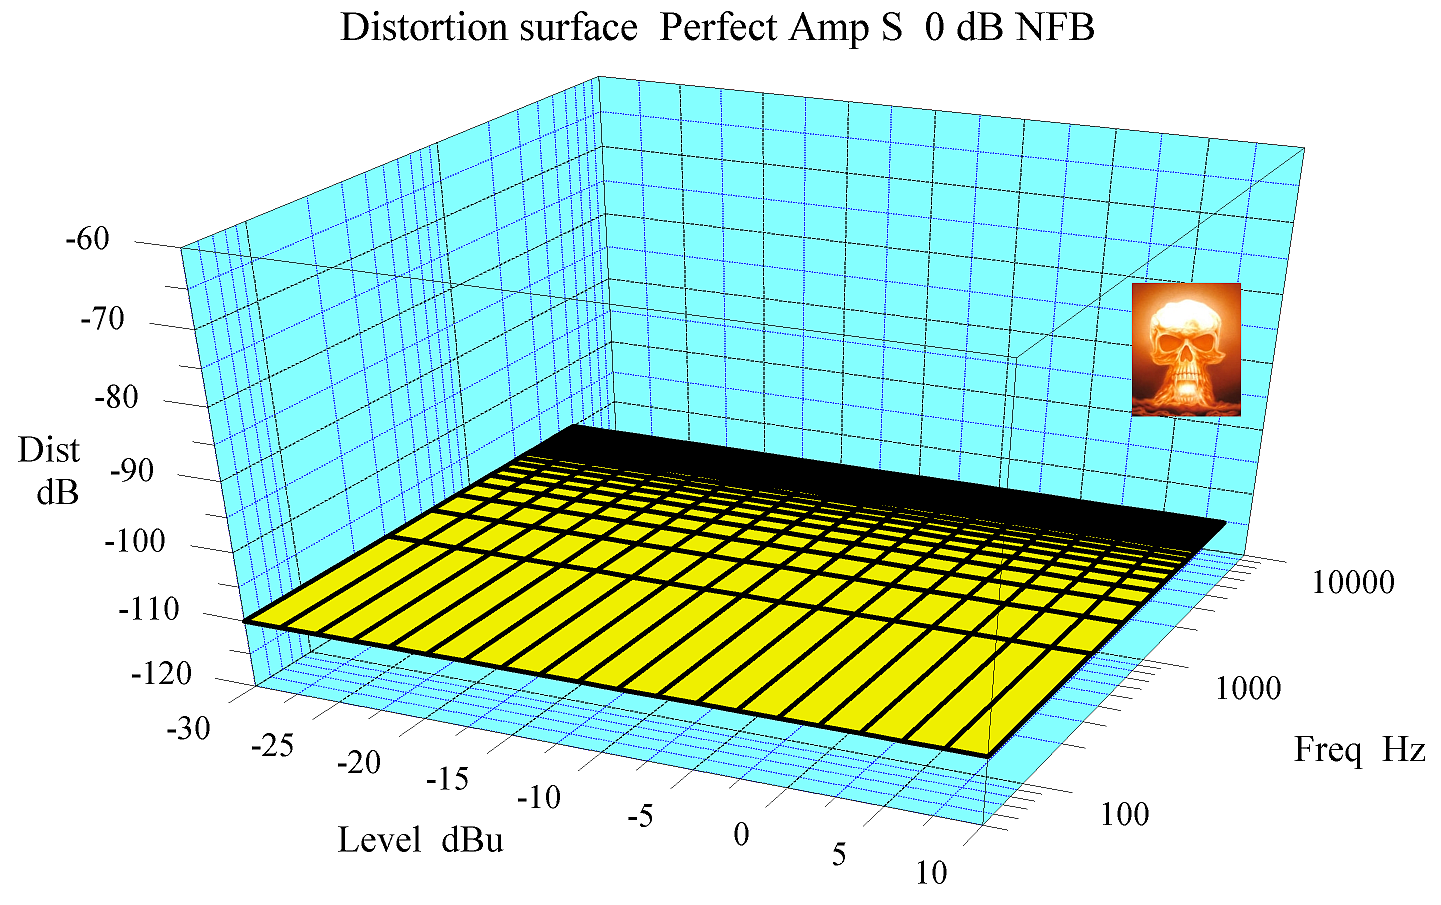 Distortion surface perfect amp S 0 dB NFB wm adj.png